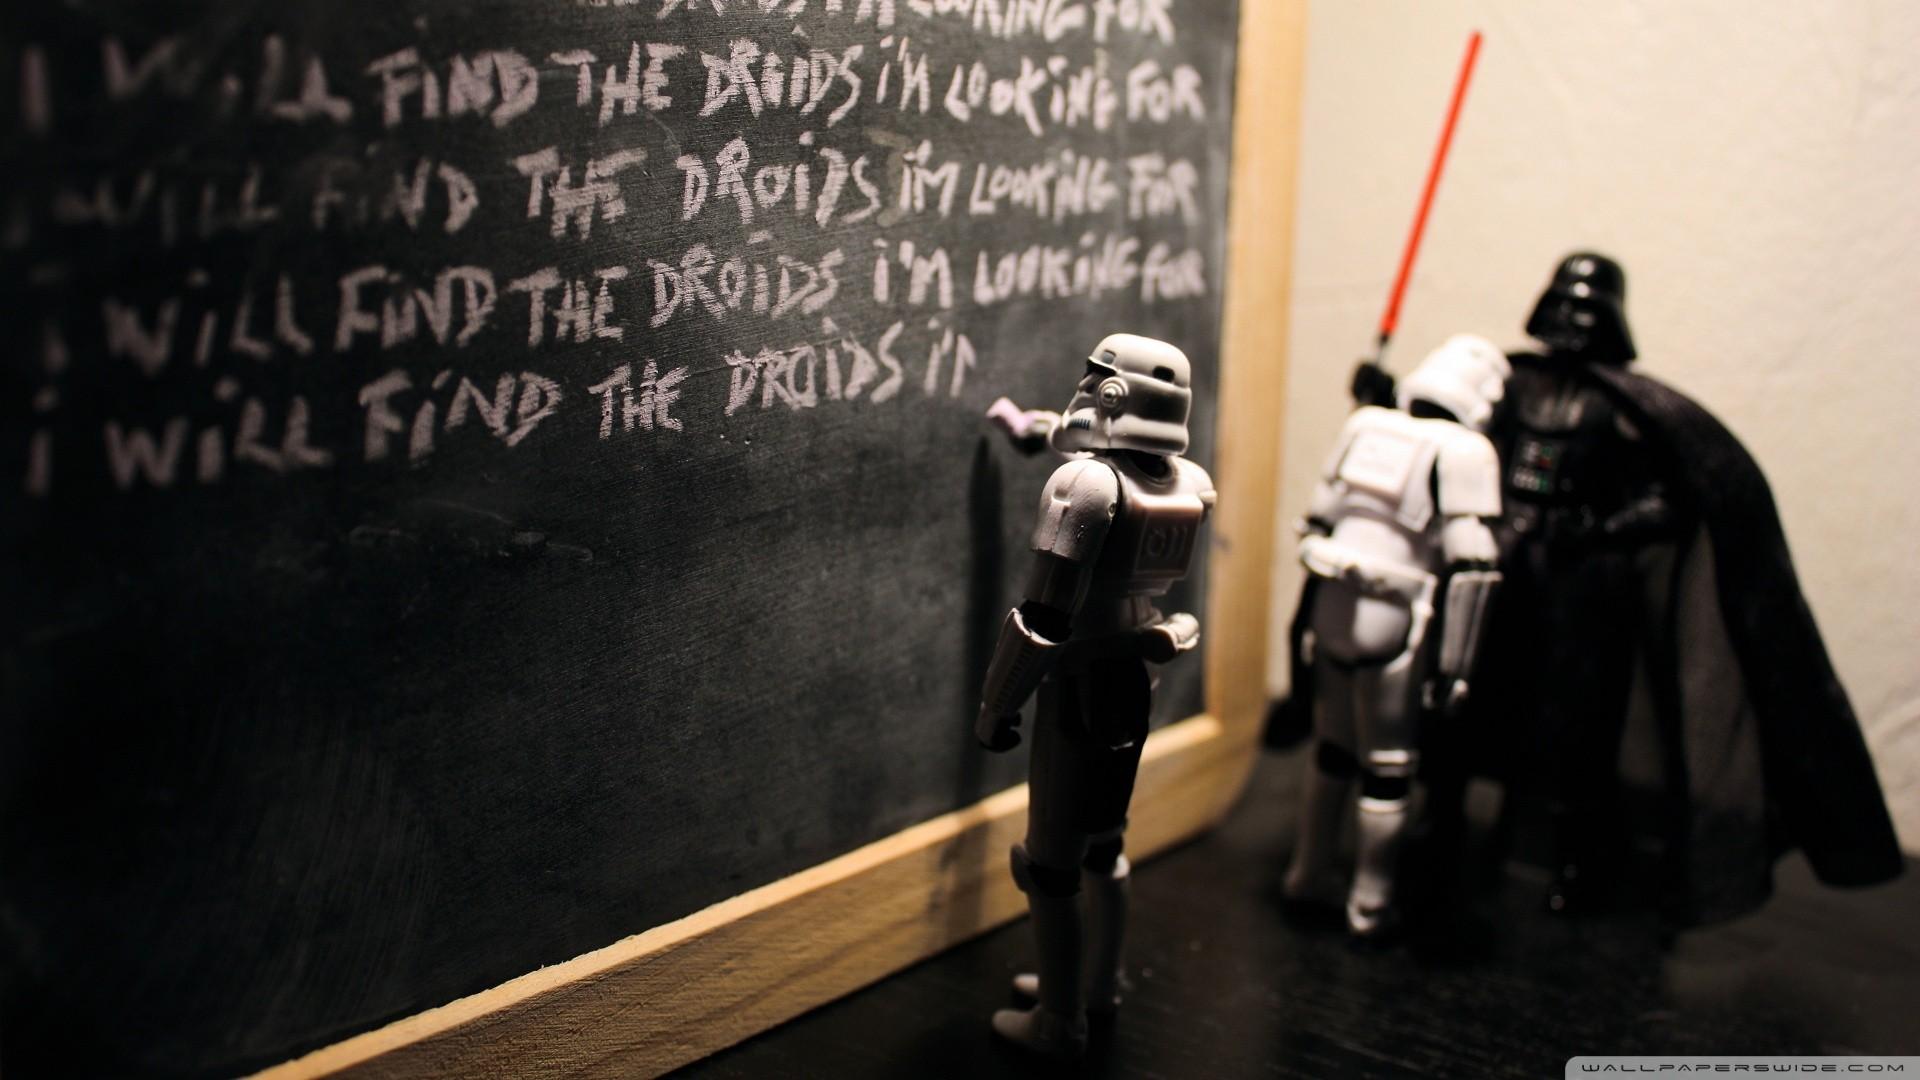 Star wars darth vader droids trooper stormtrooper wallpaper | (20543)